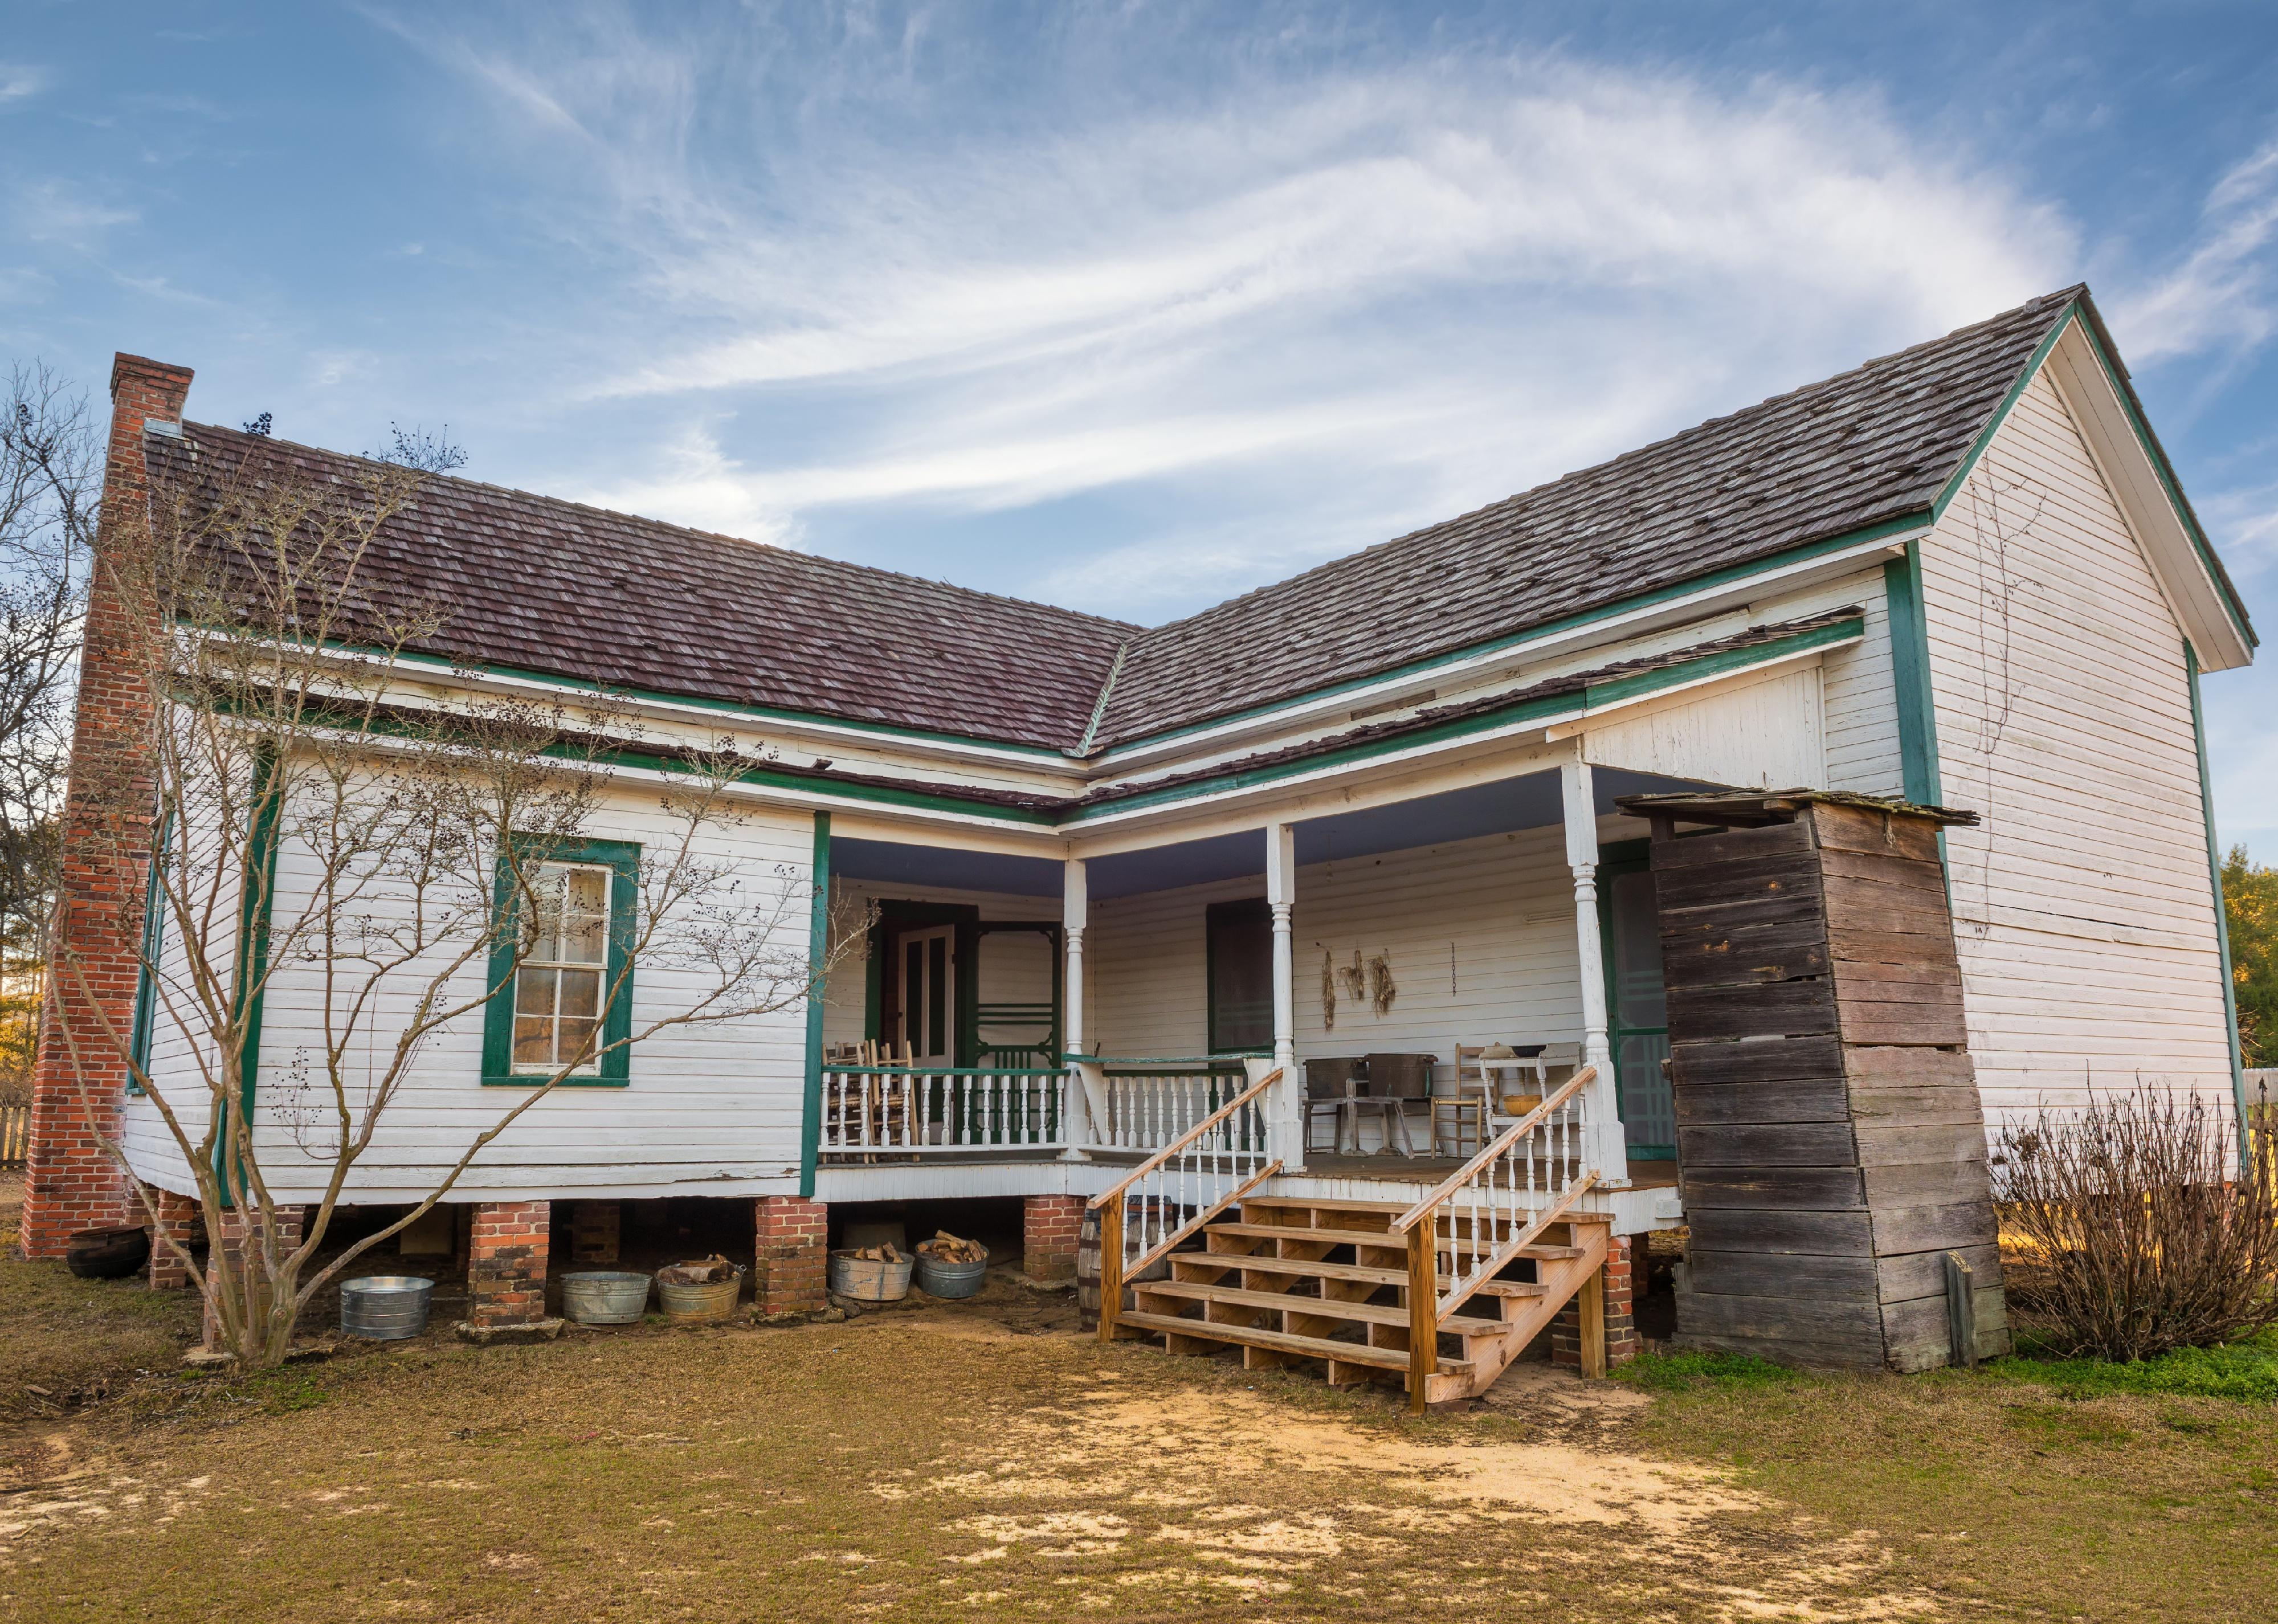 Old farmhouse in the historic landmark park near Dothan, Alabama.